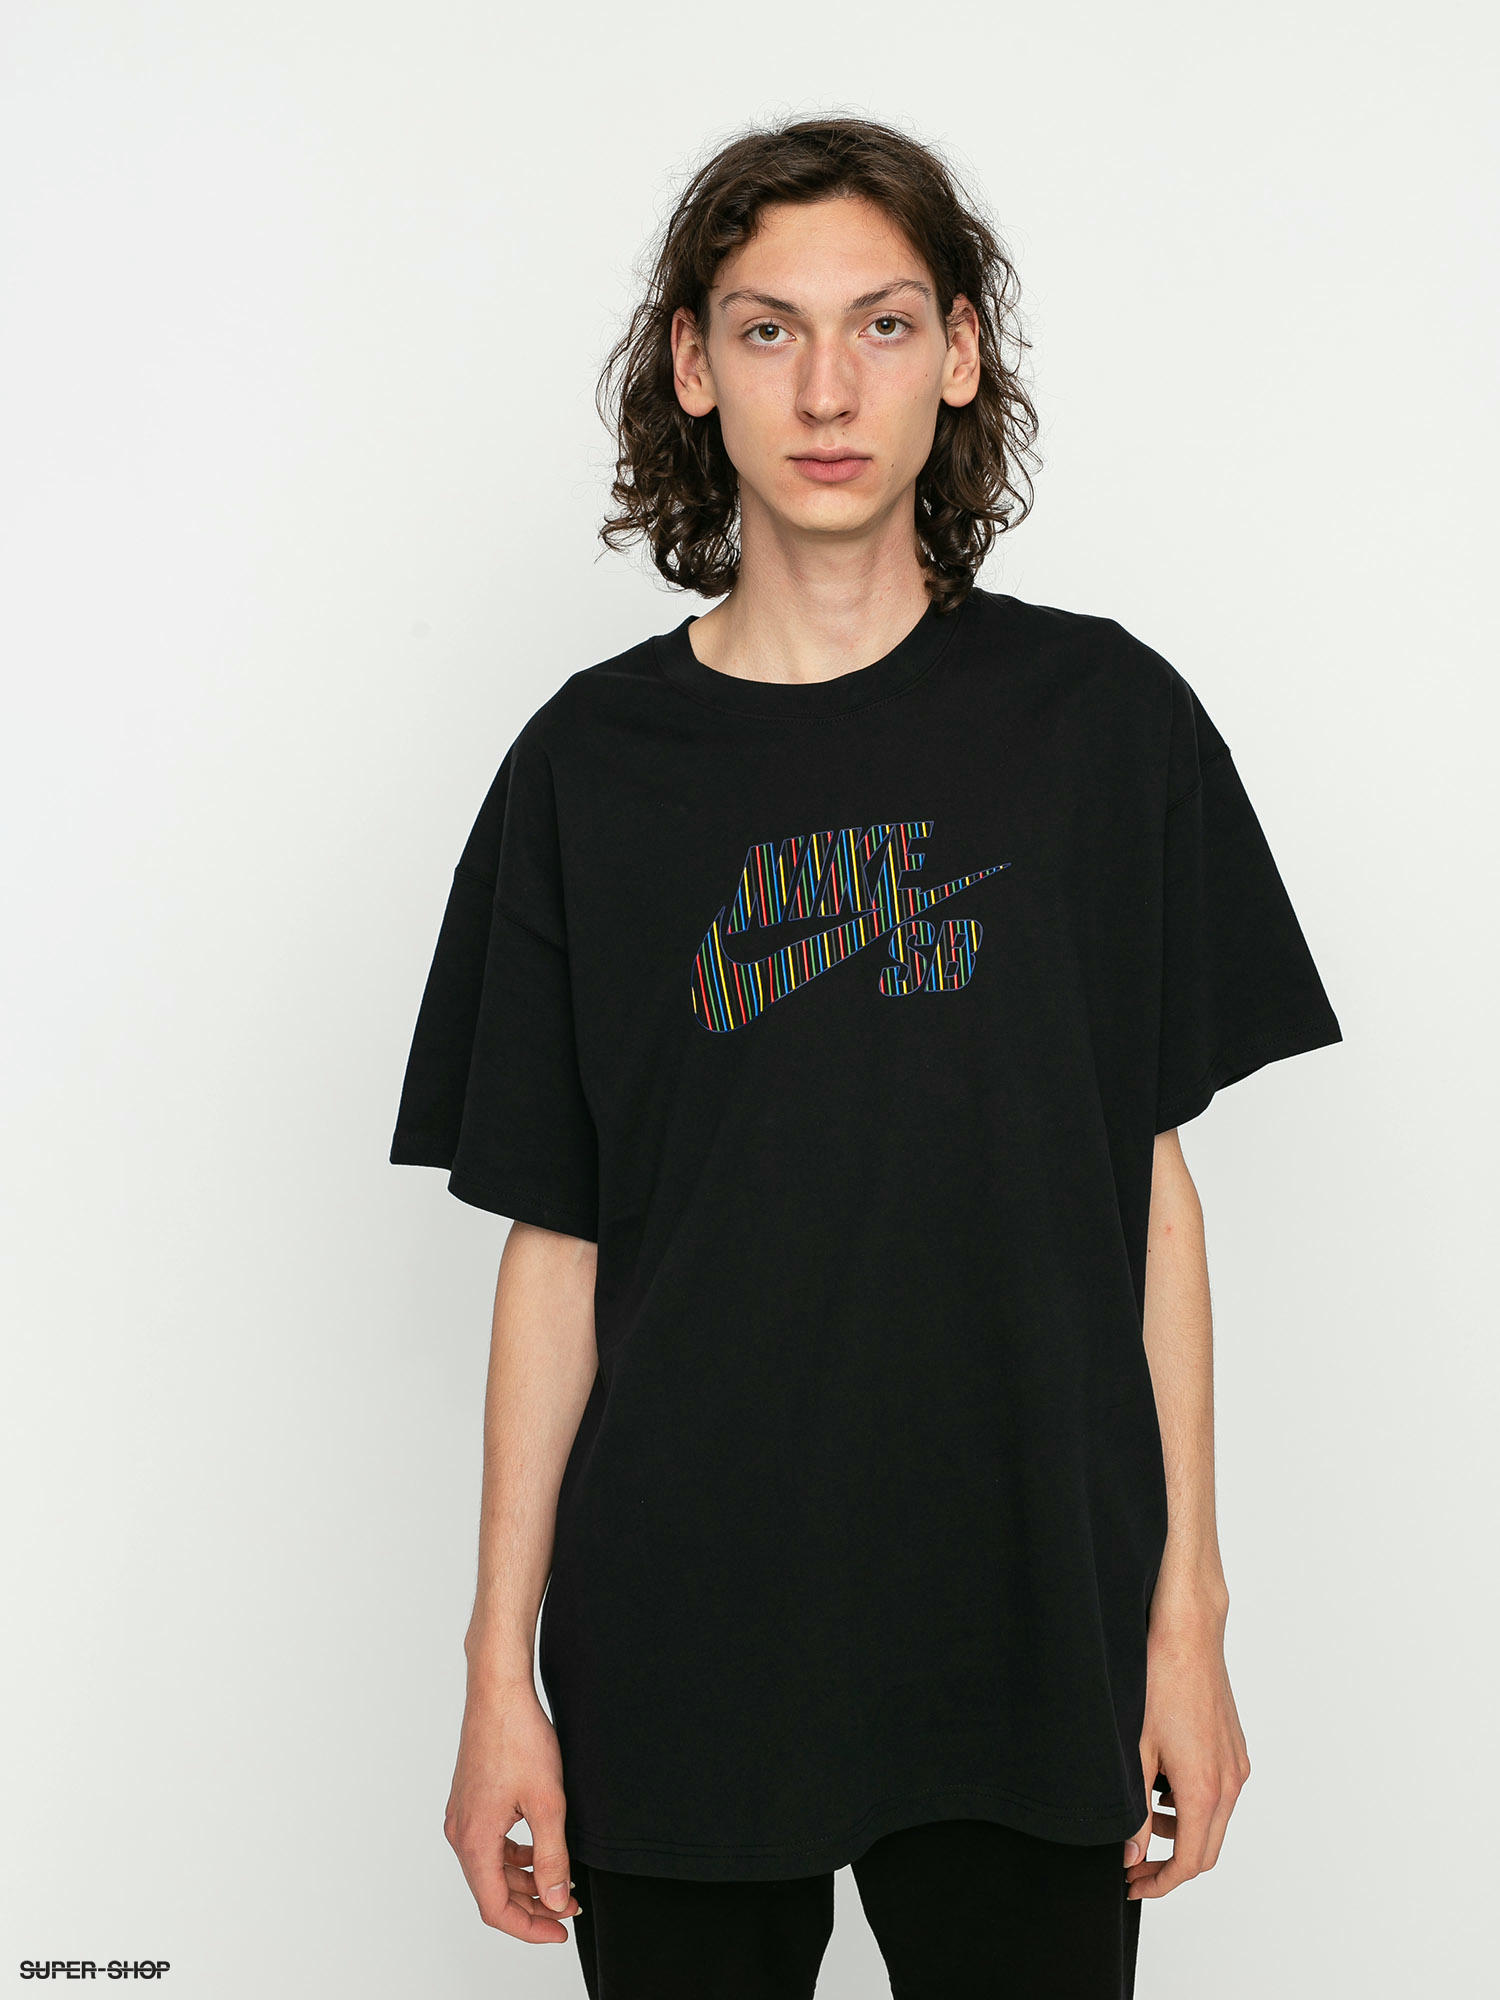 kopya sarkom tanıştığıma memnun oldum  T-shirts Nike SB men - Sale | SUPER-SHOP